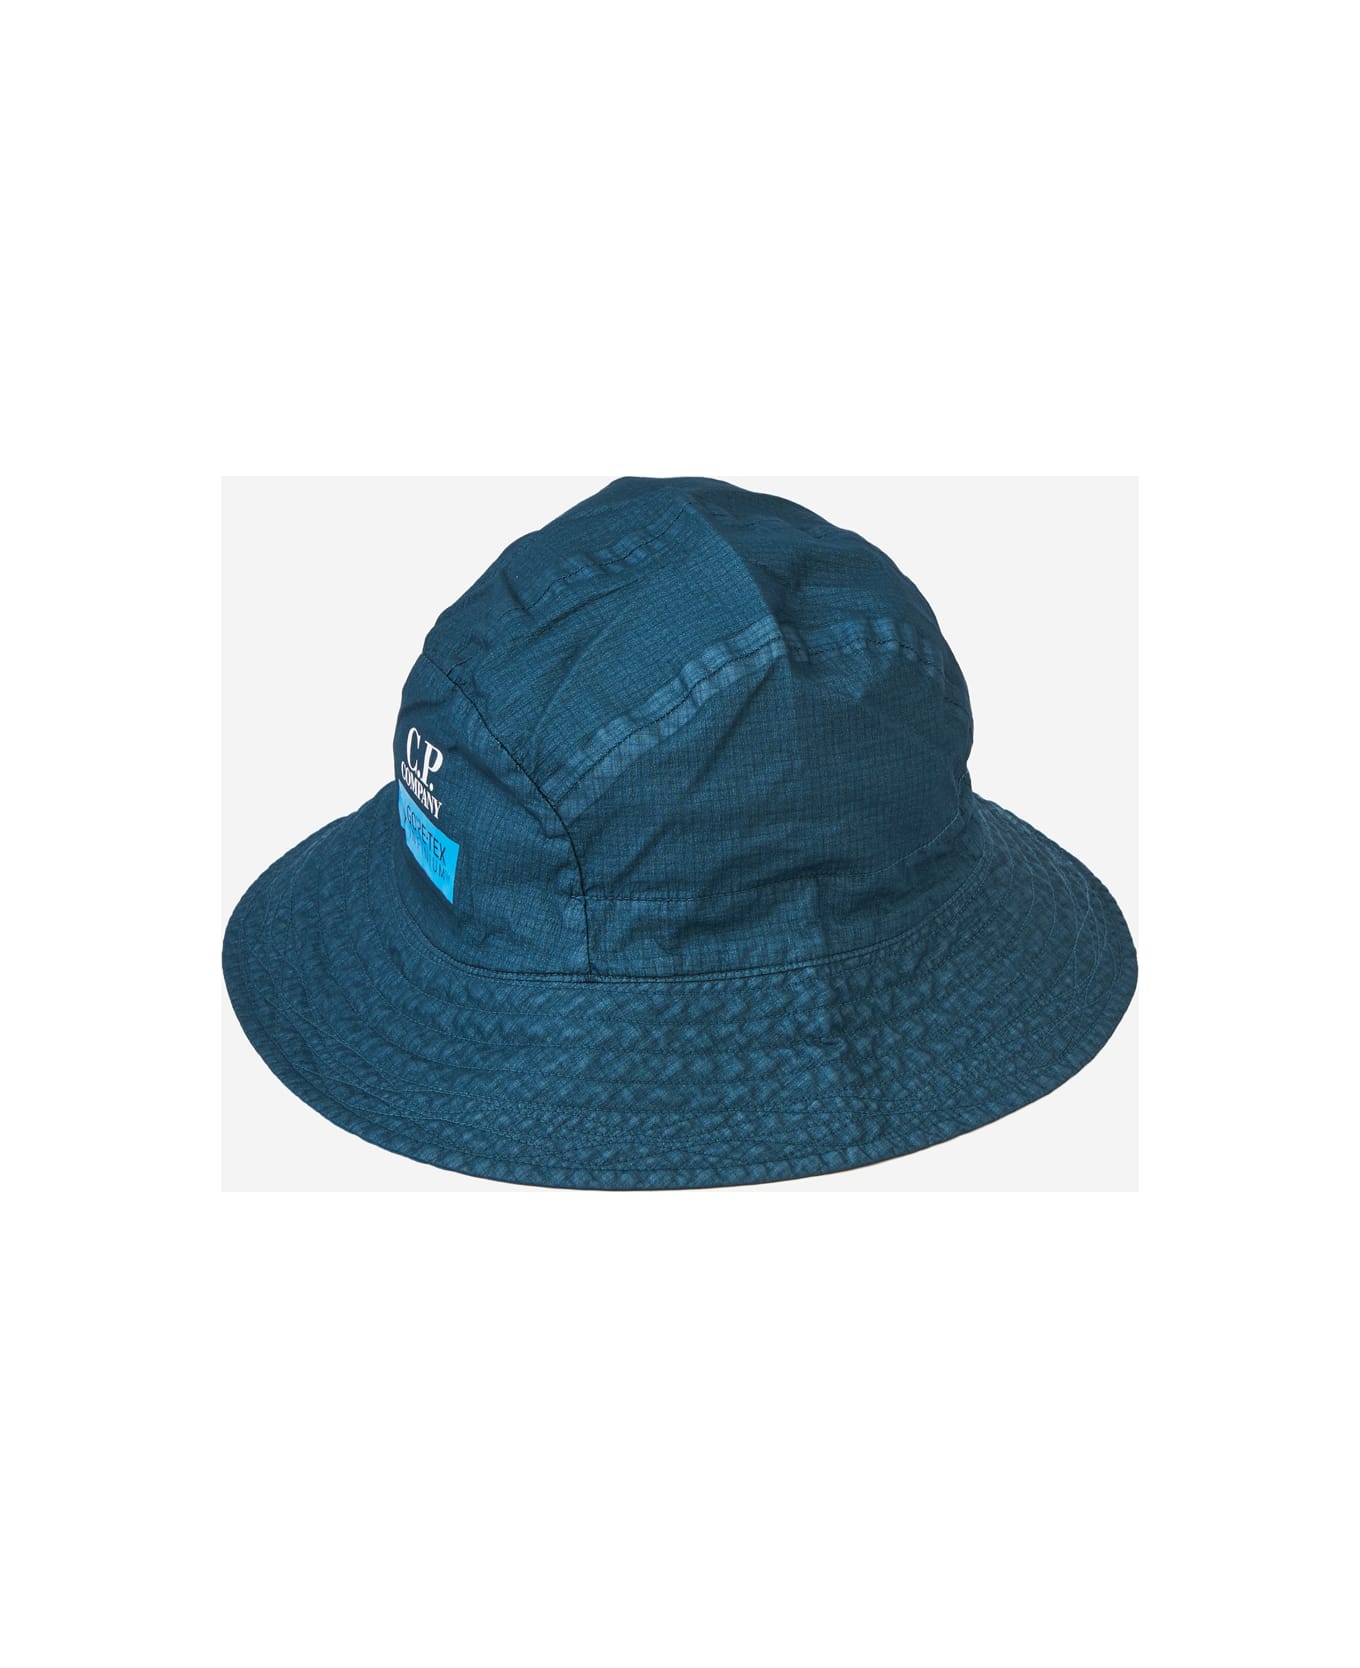 C.P. Company Hats - Cyan